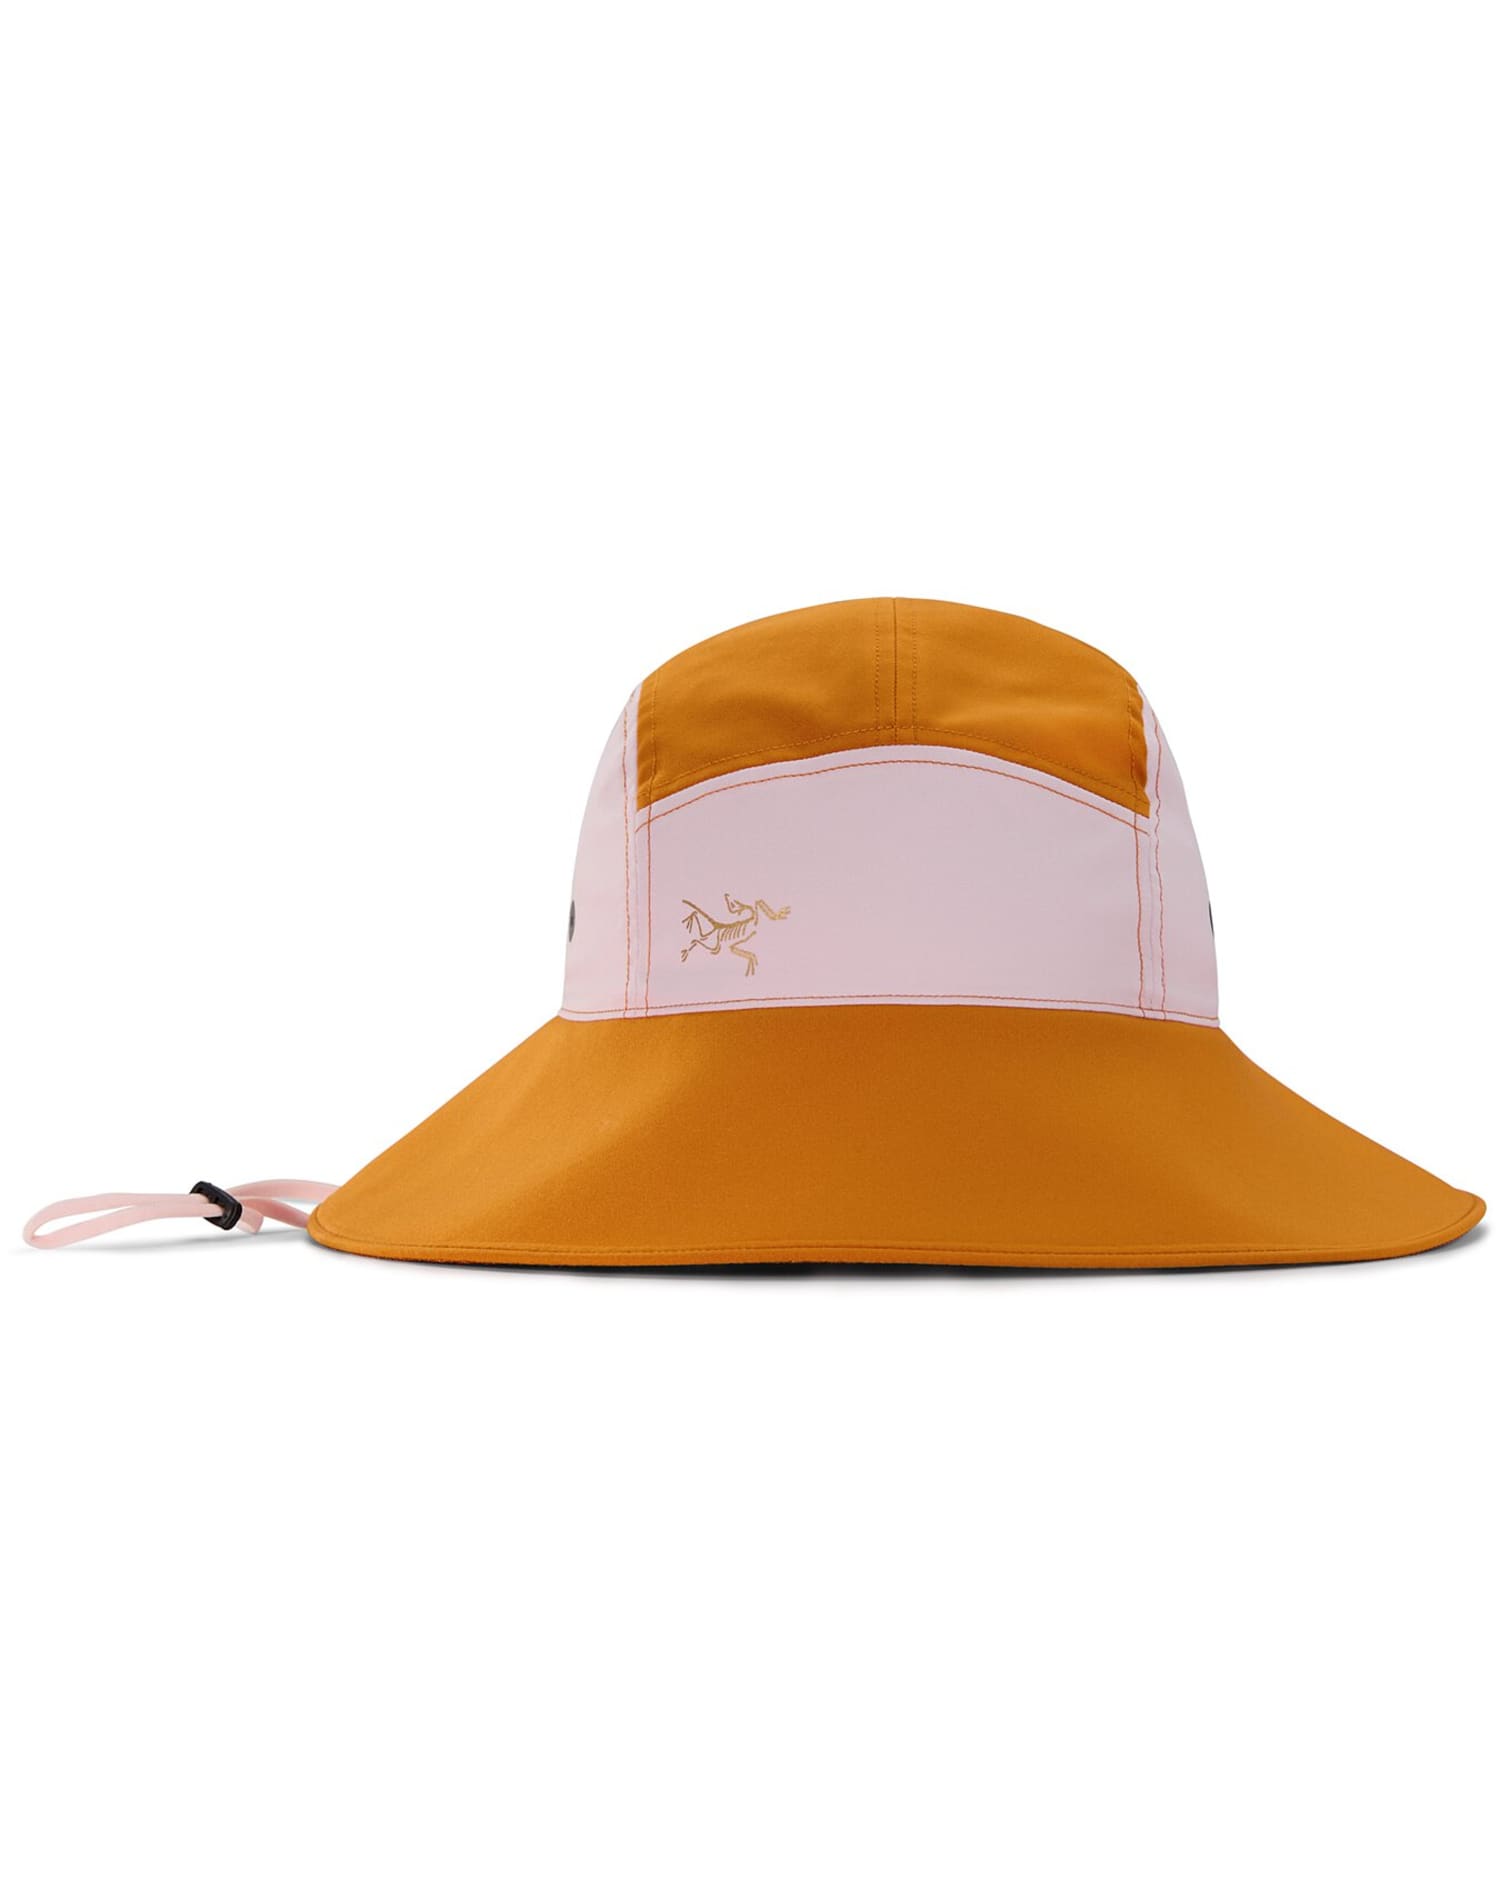 Light Weight Sun Protection Caps Home Prefer Womens Bucket Sun Hat UPF 50 